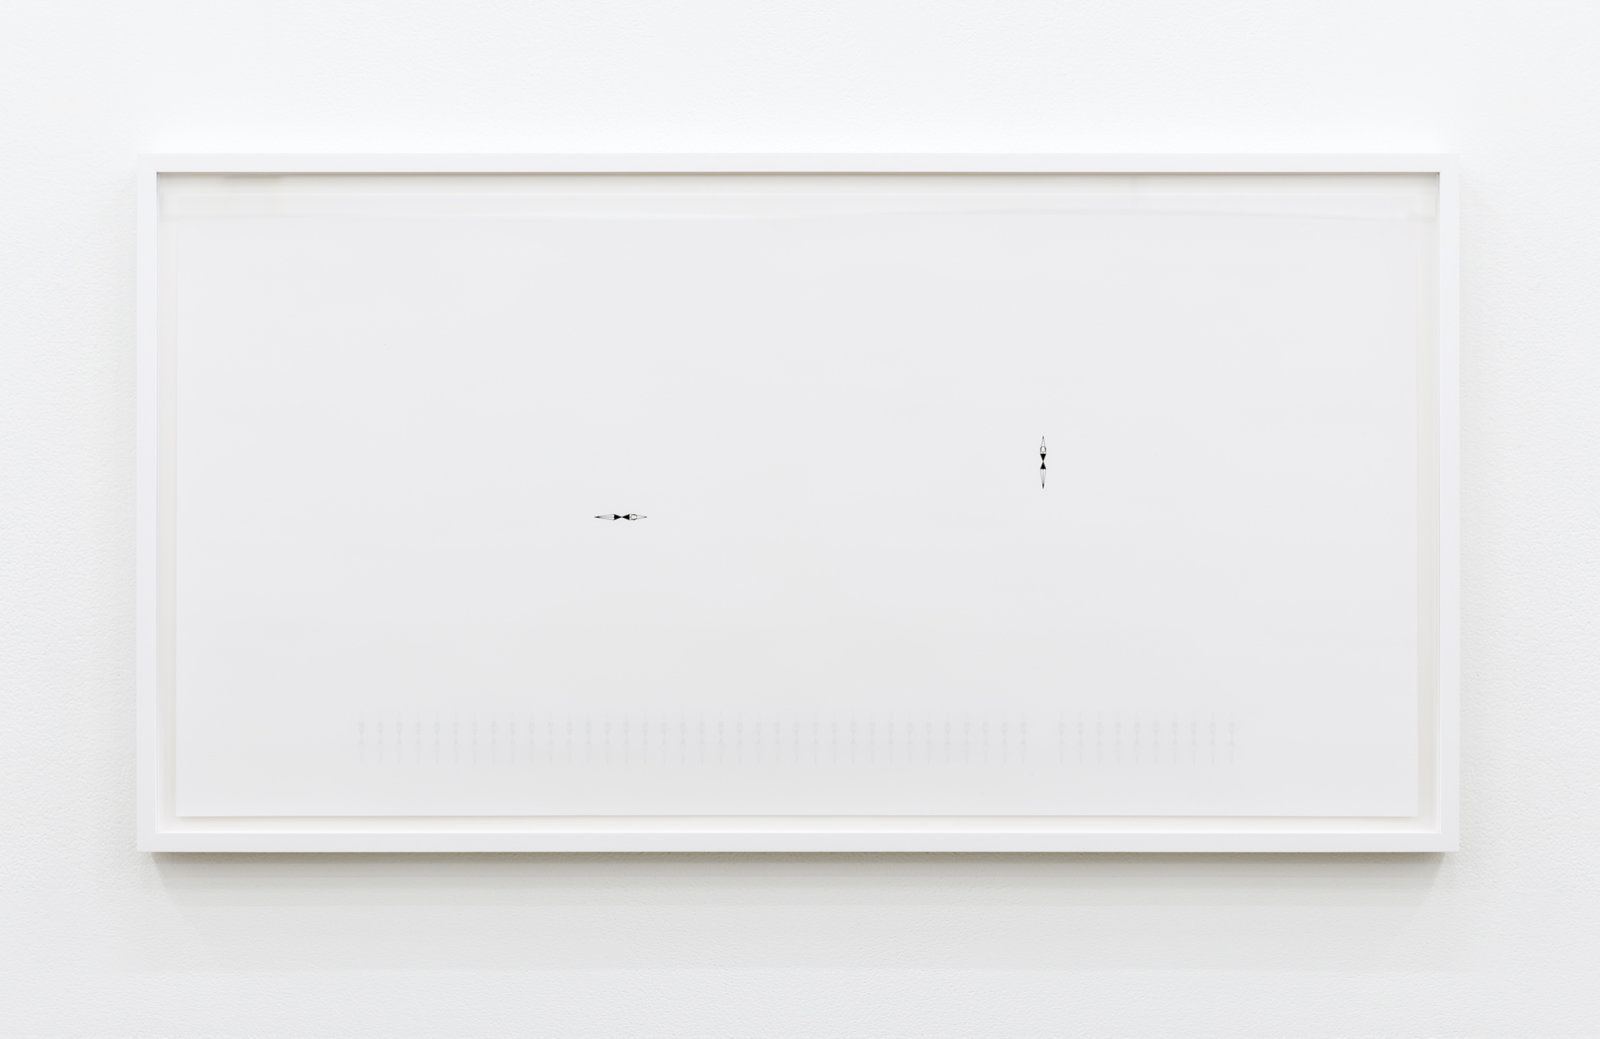 Janice Kerbel, Sync (Line), 2017, double sided silkscreen print on paper, 33 x 17 in. (84 x 42 cm)